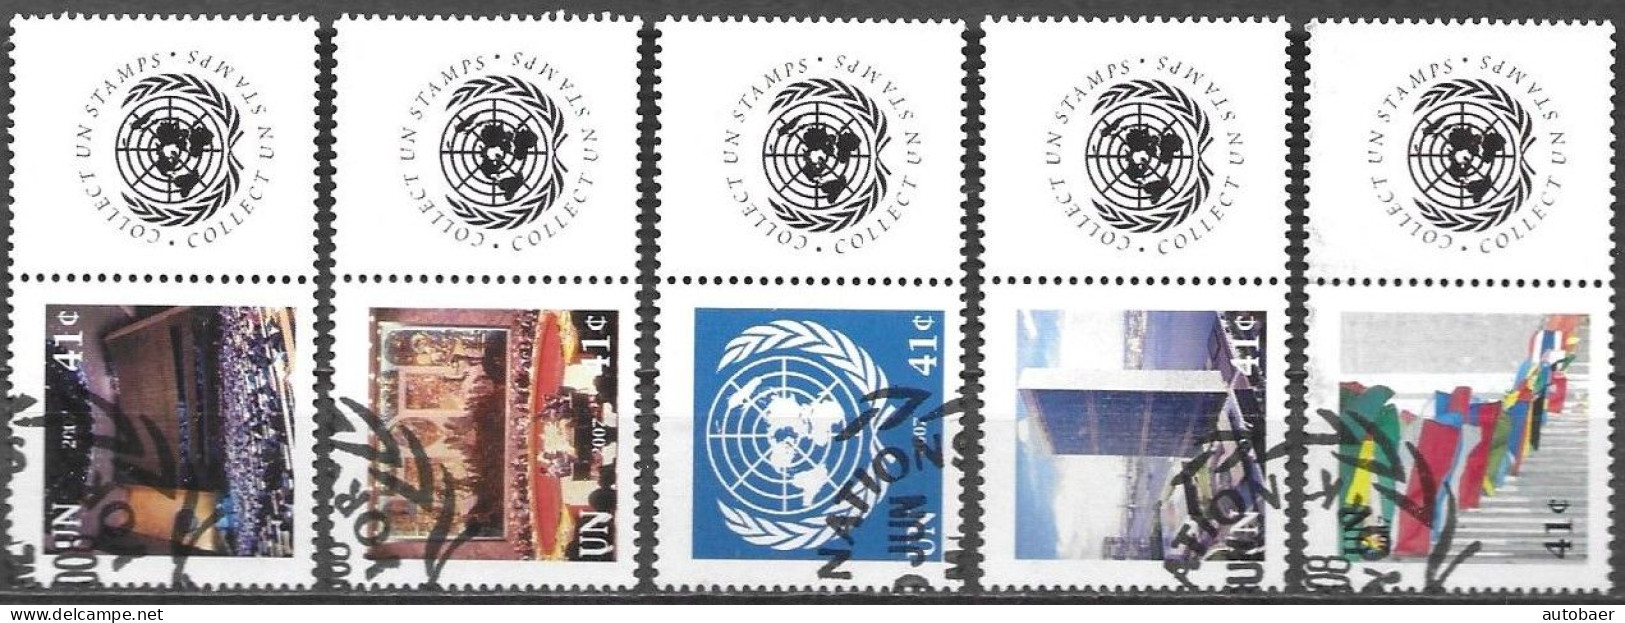 United Nations UNO UN Vereinte Nationen New York 2007 Greetings Mi. No. 1057-61 Label Used Cancelled Oblitéré - Usados